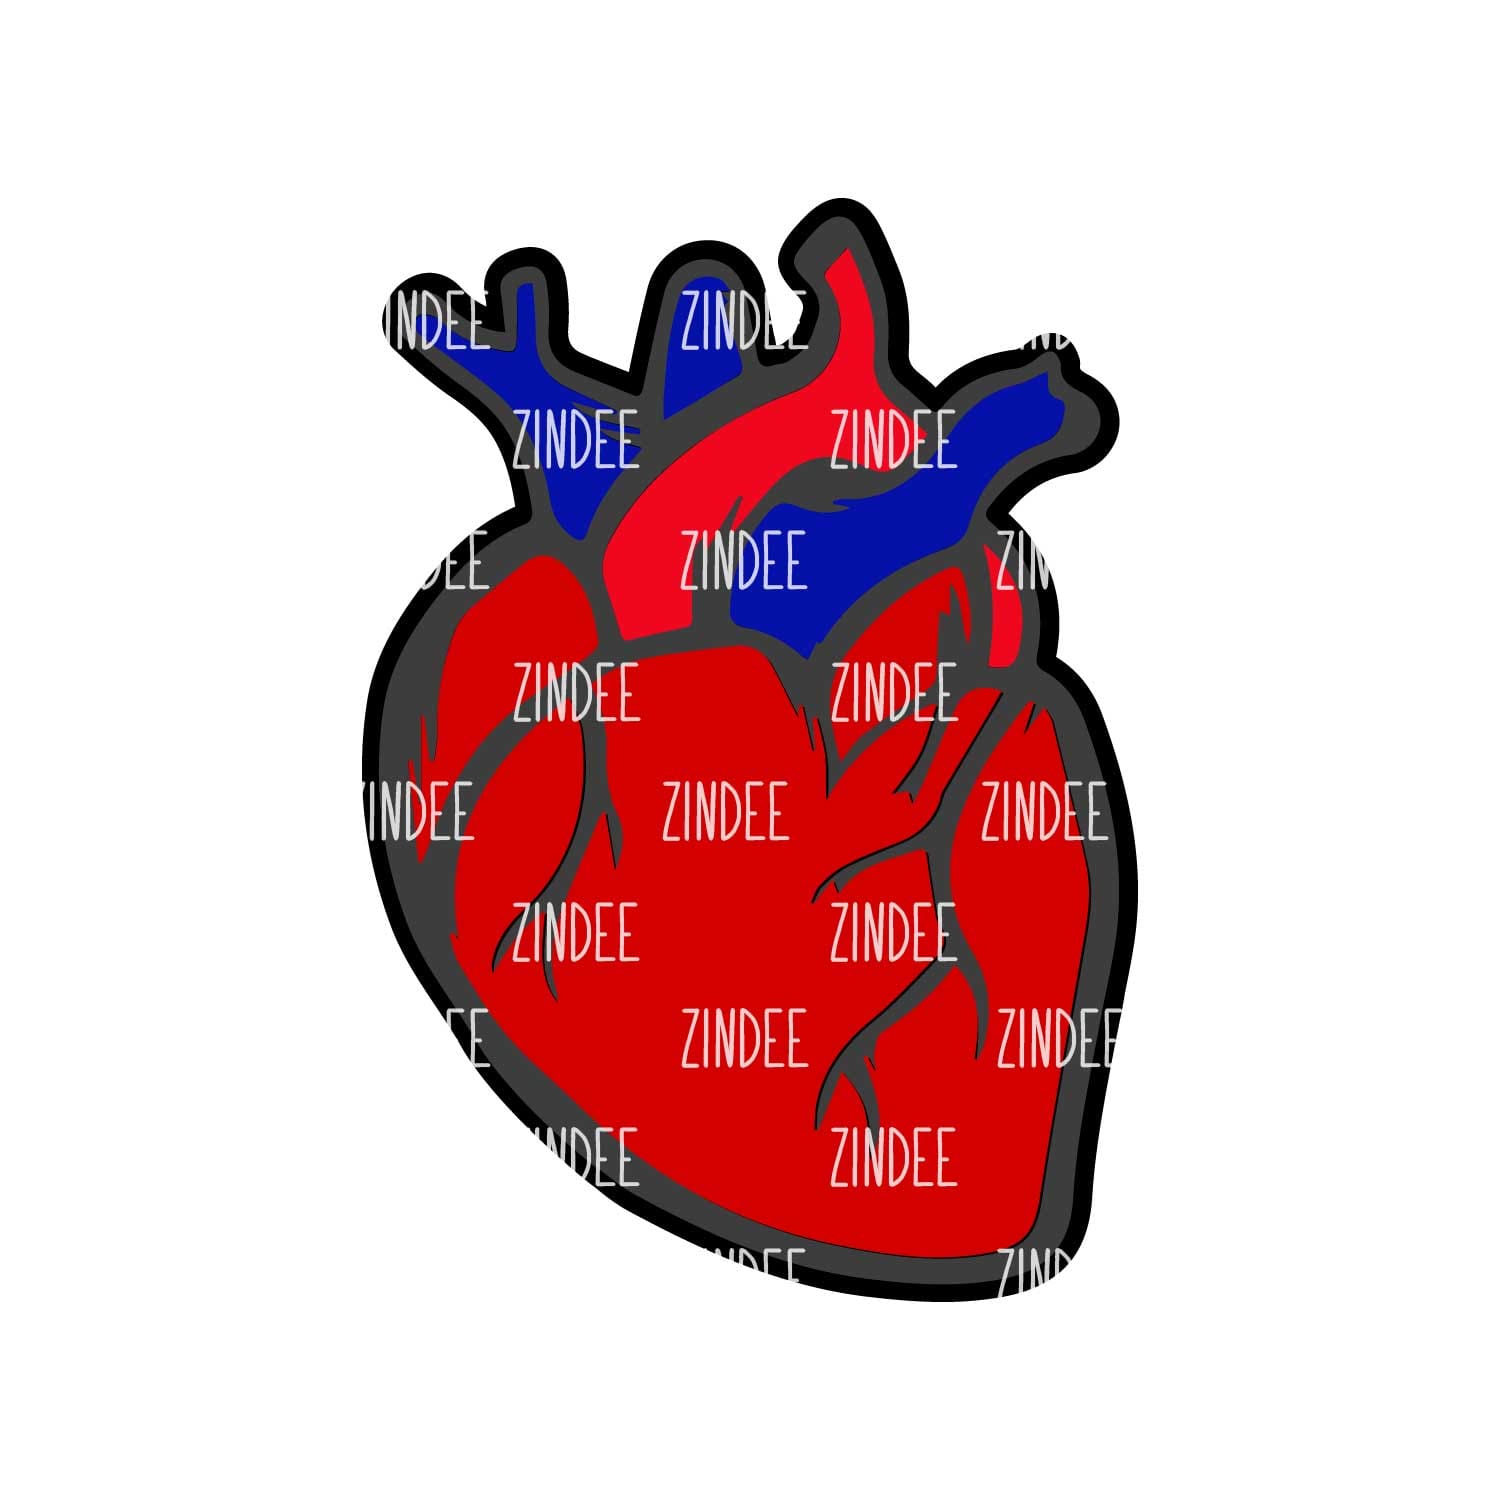 Anatomical Heart Acrylic Blank